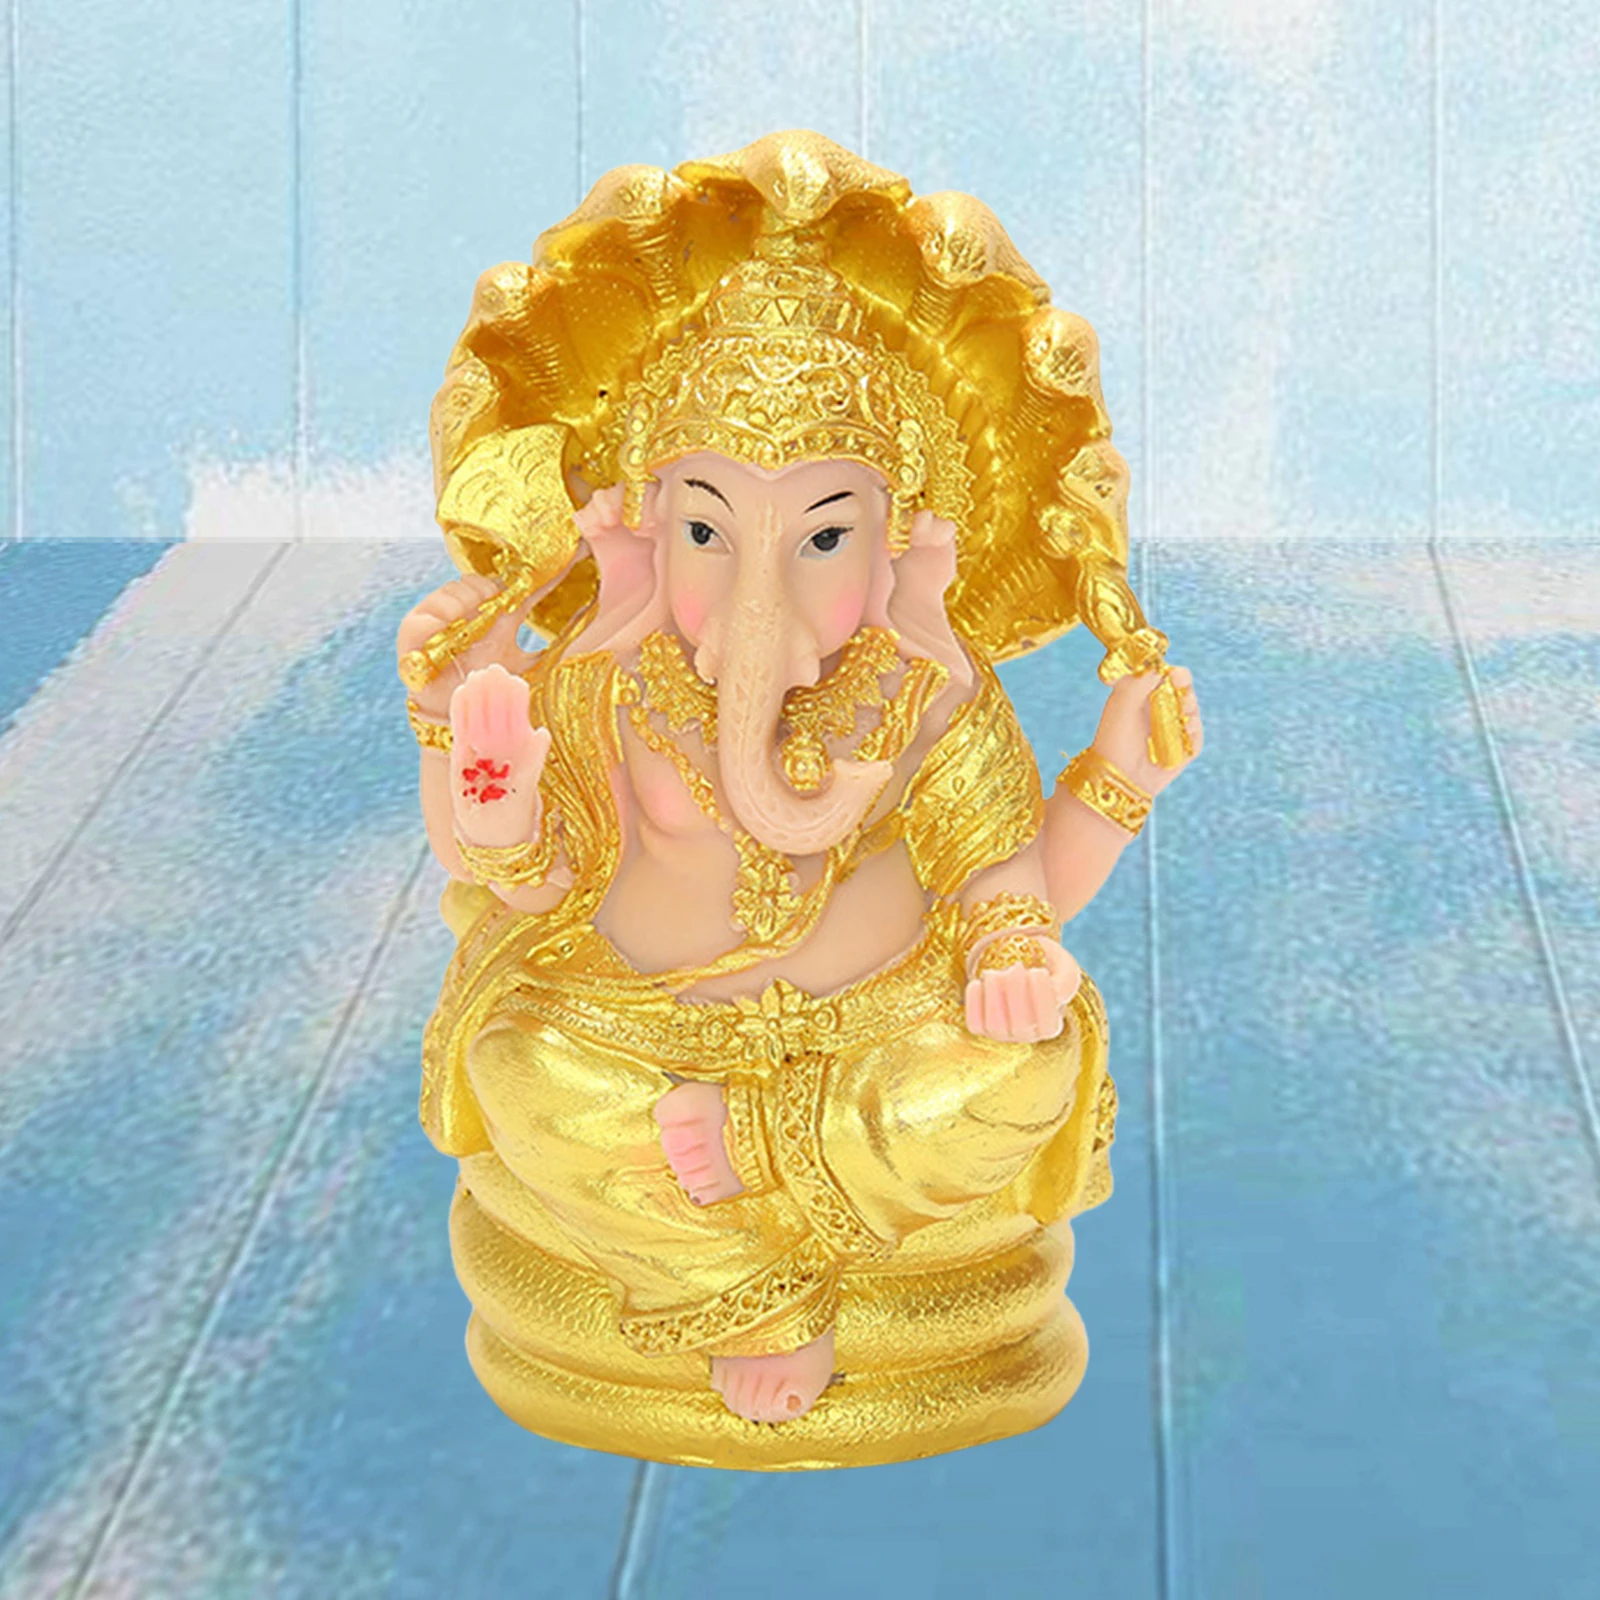 Ganesha Figurine India Elephant God Buddha Statue Home Porch Mandir Diwali Decor Sculpture for Car Dashboard Housewarming Gift